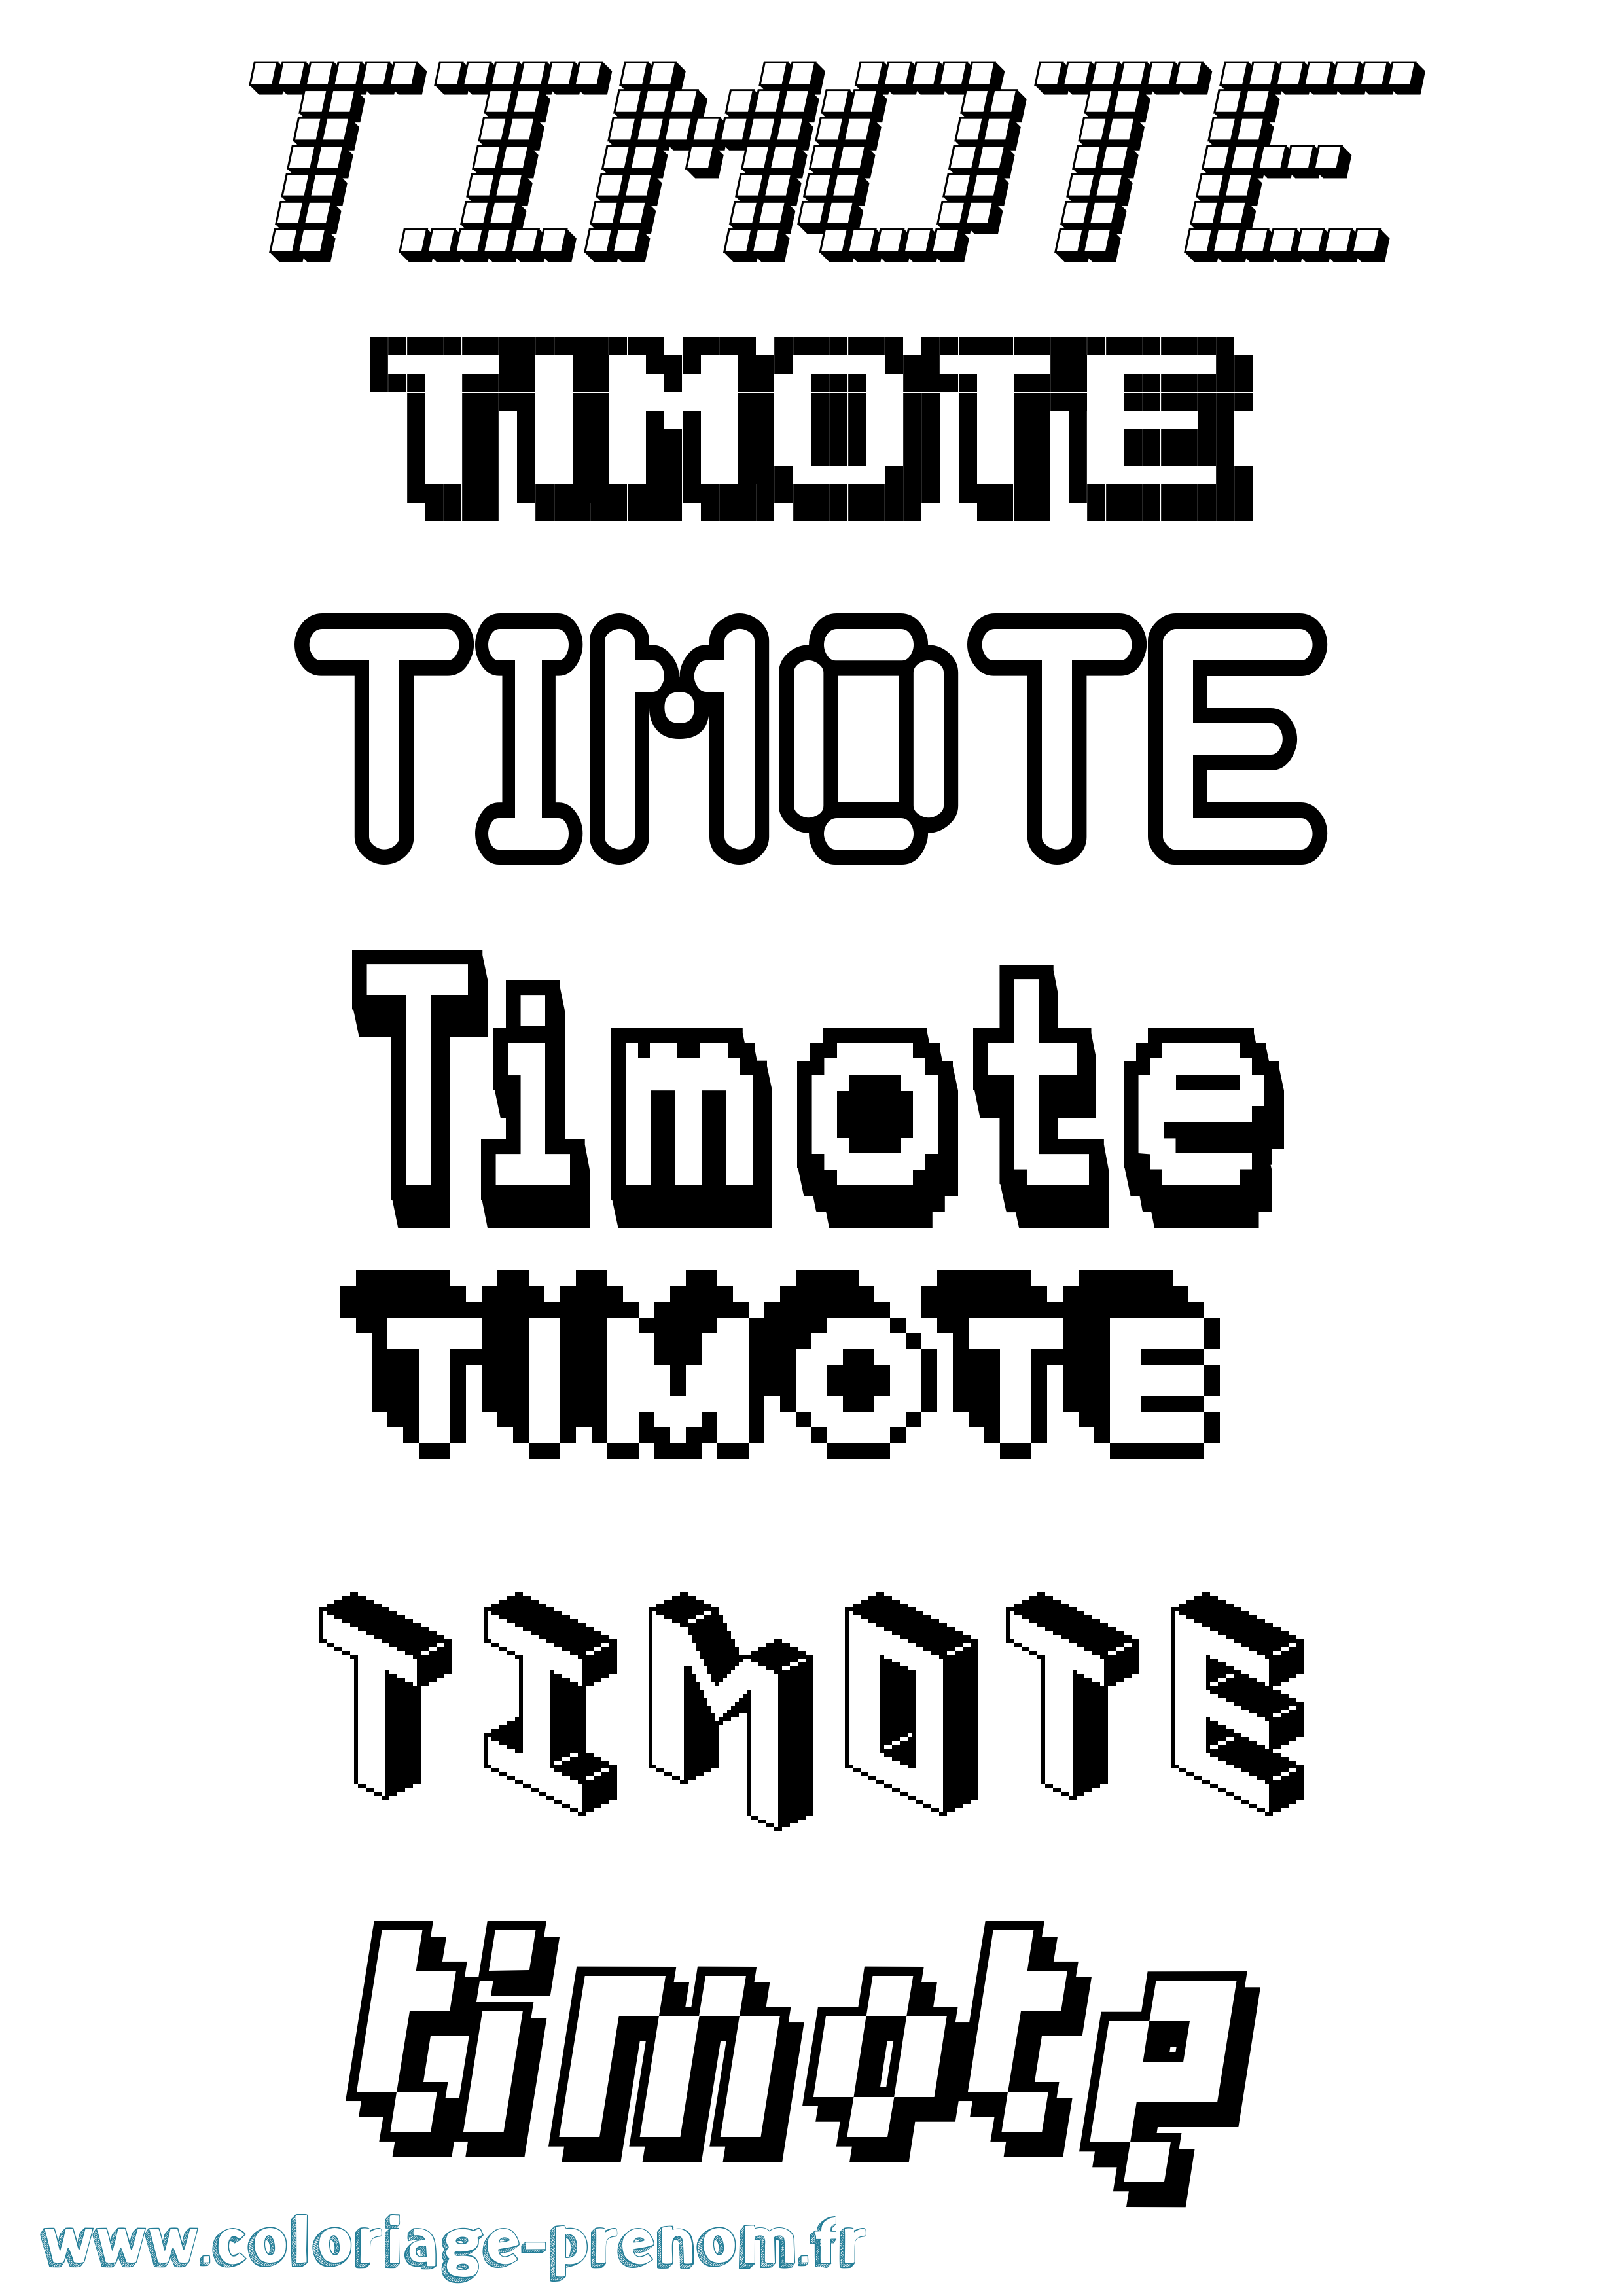 Coloriage prénom Timote Pixel